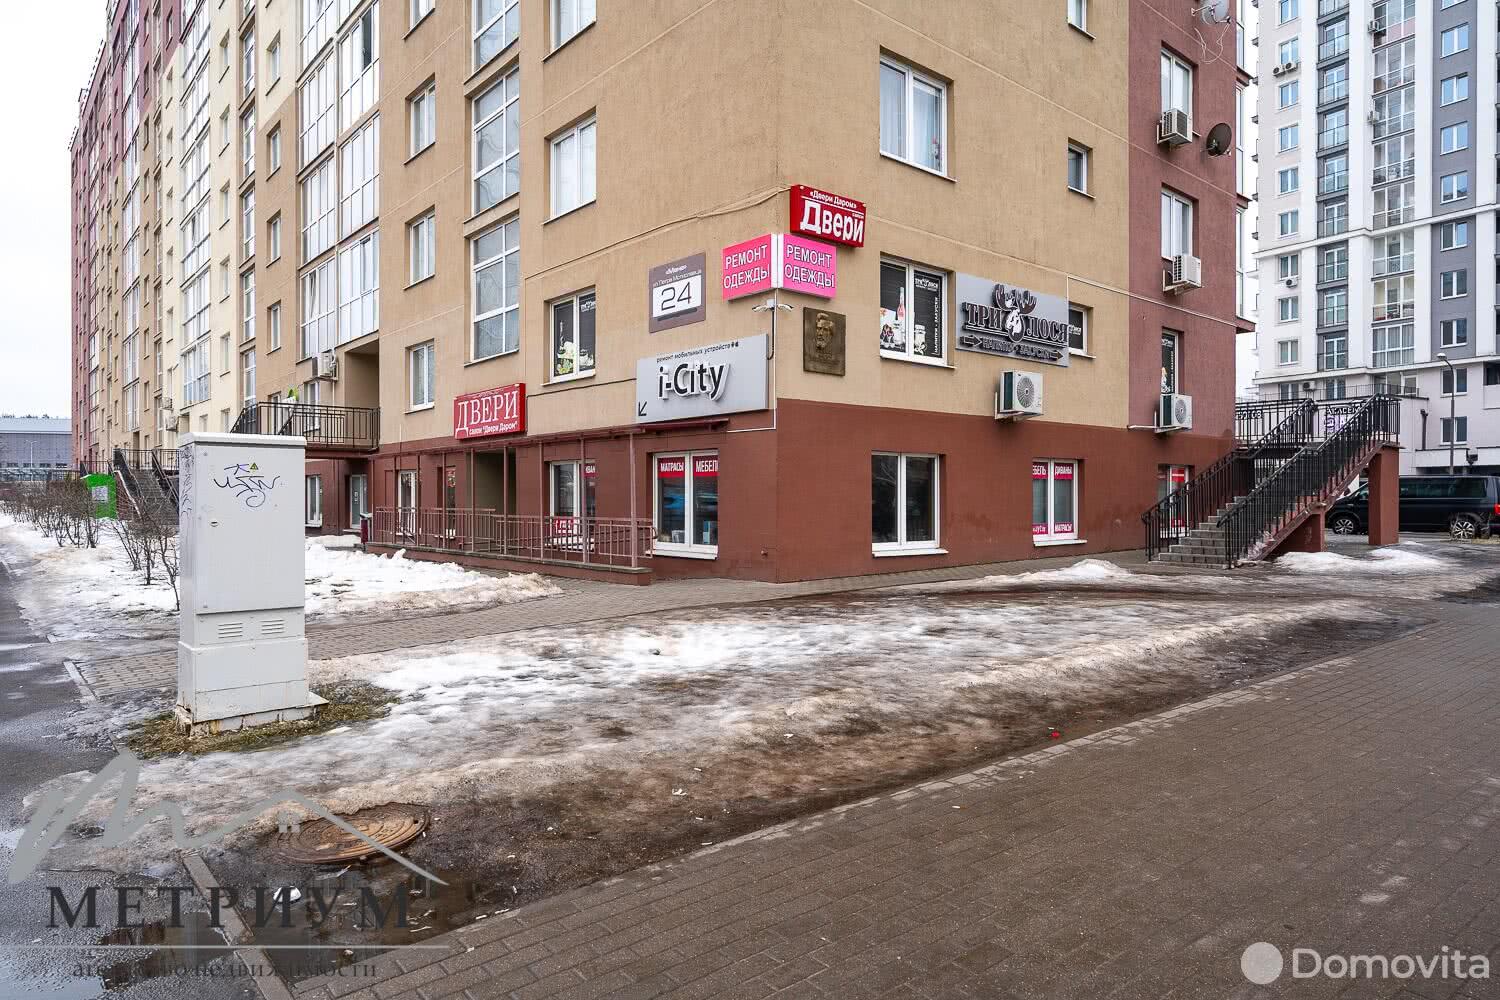 Продажа торговой точки на ул. Петра Мстиславца, д. 24 в Минске, 281664USD - фото 2